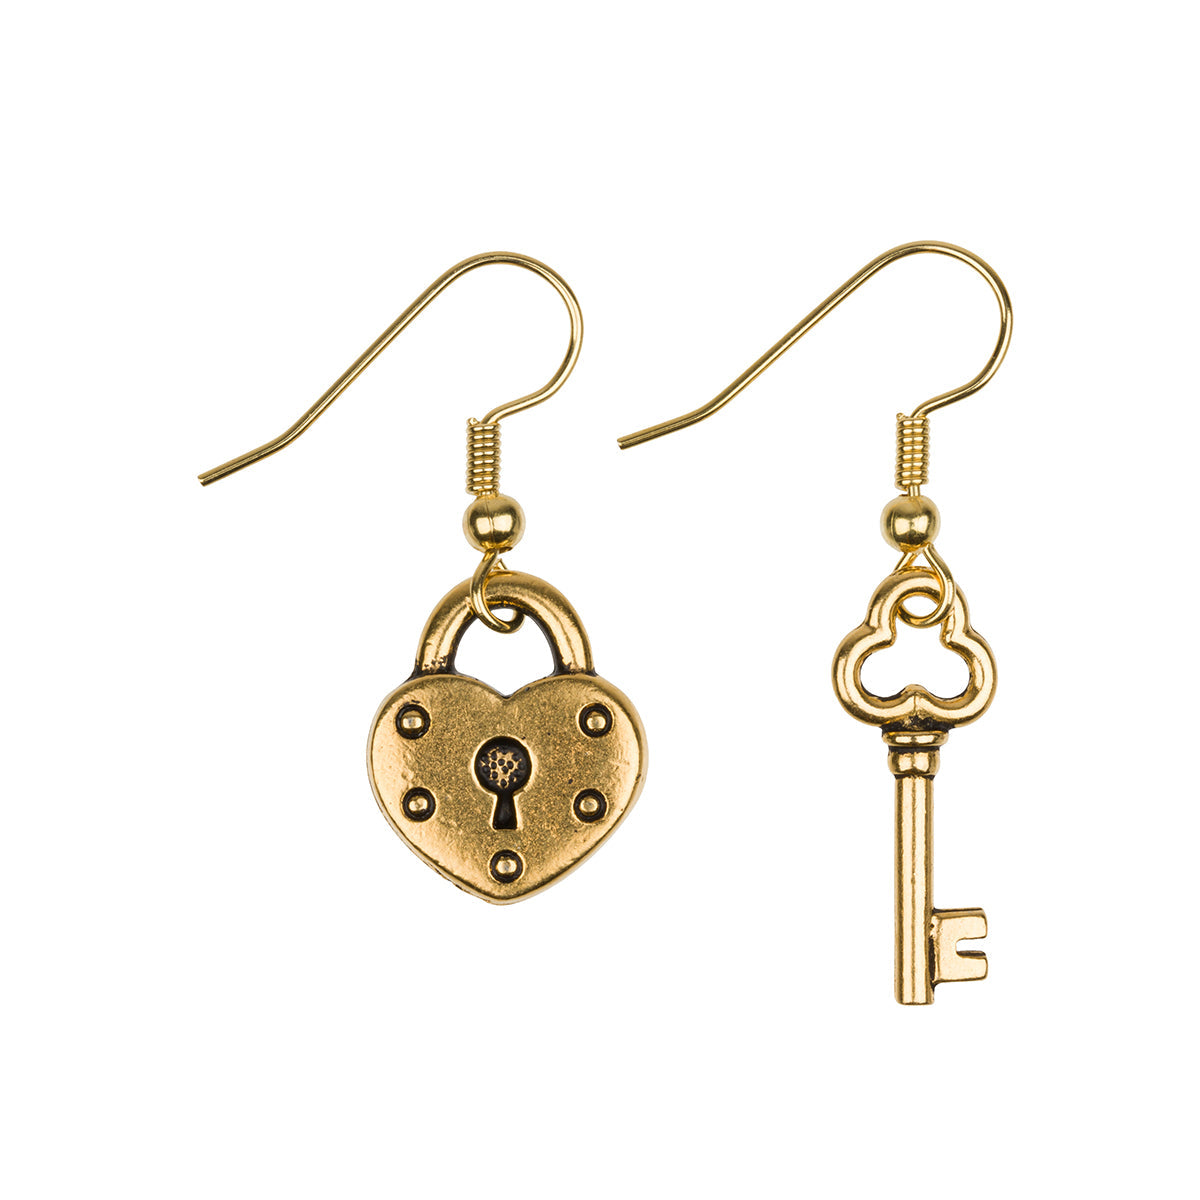 Gold Lock and Key Earrings Dollydagger